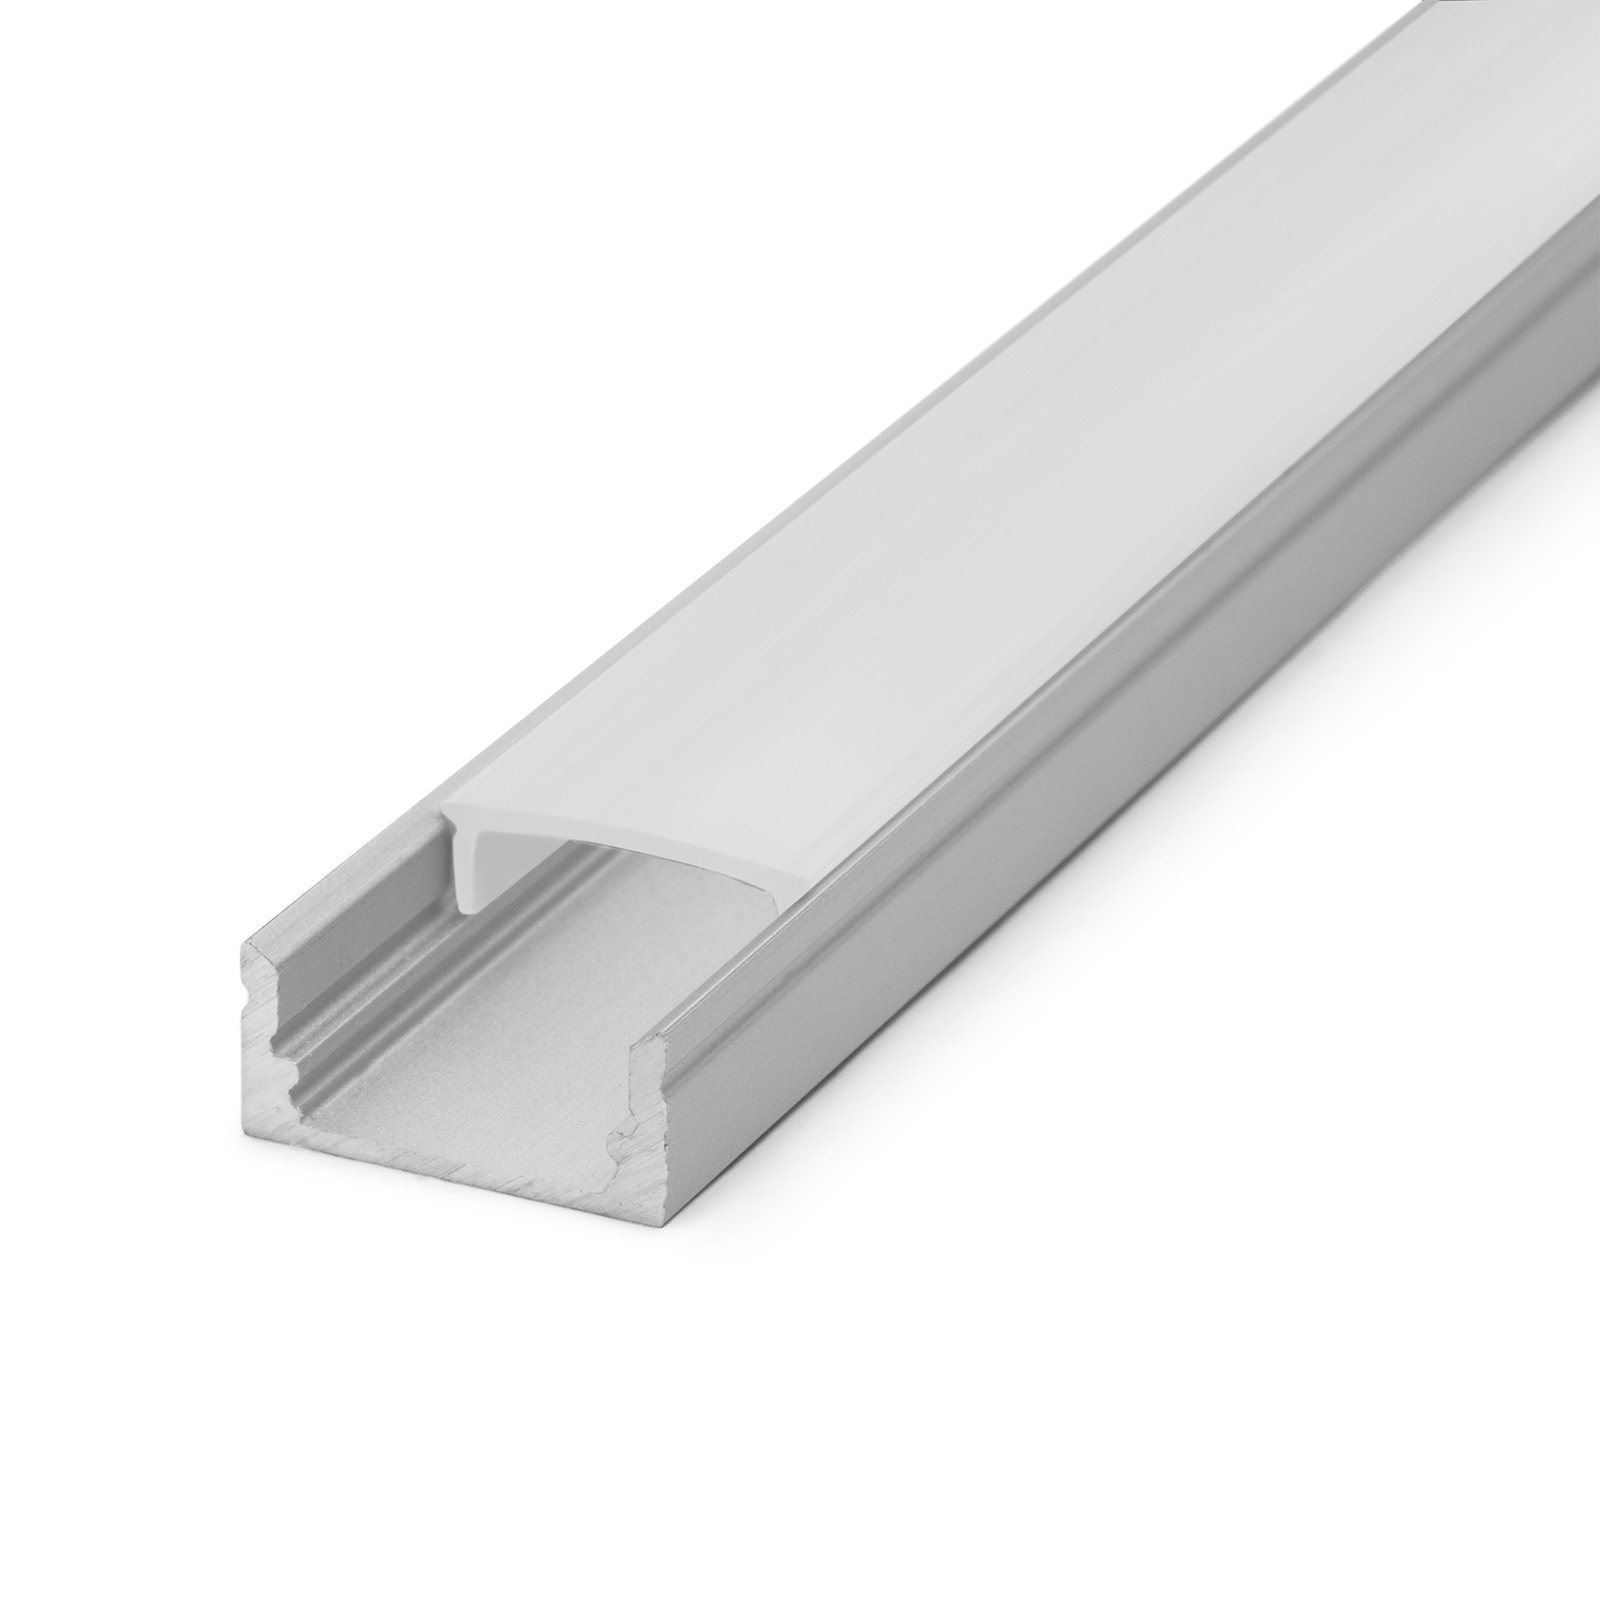 LED alumínium profil takaró búra thumb